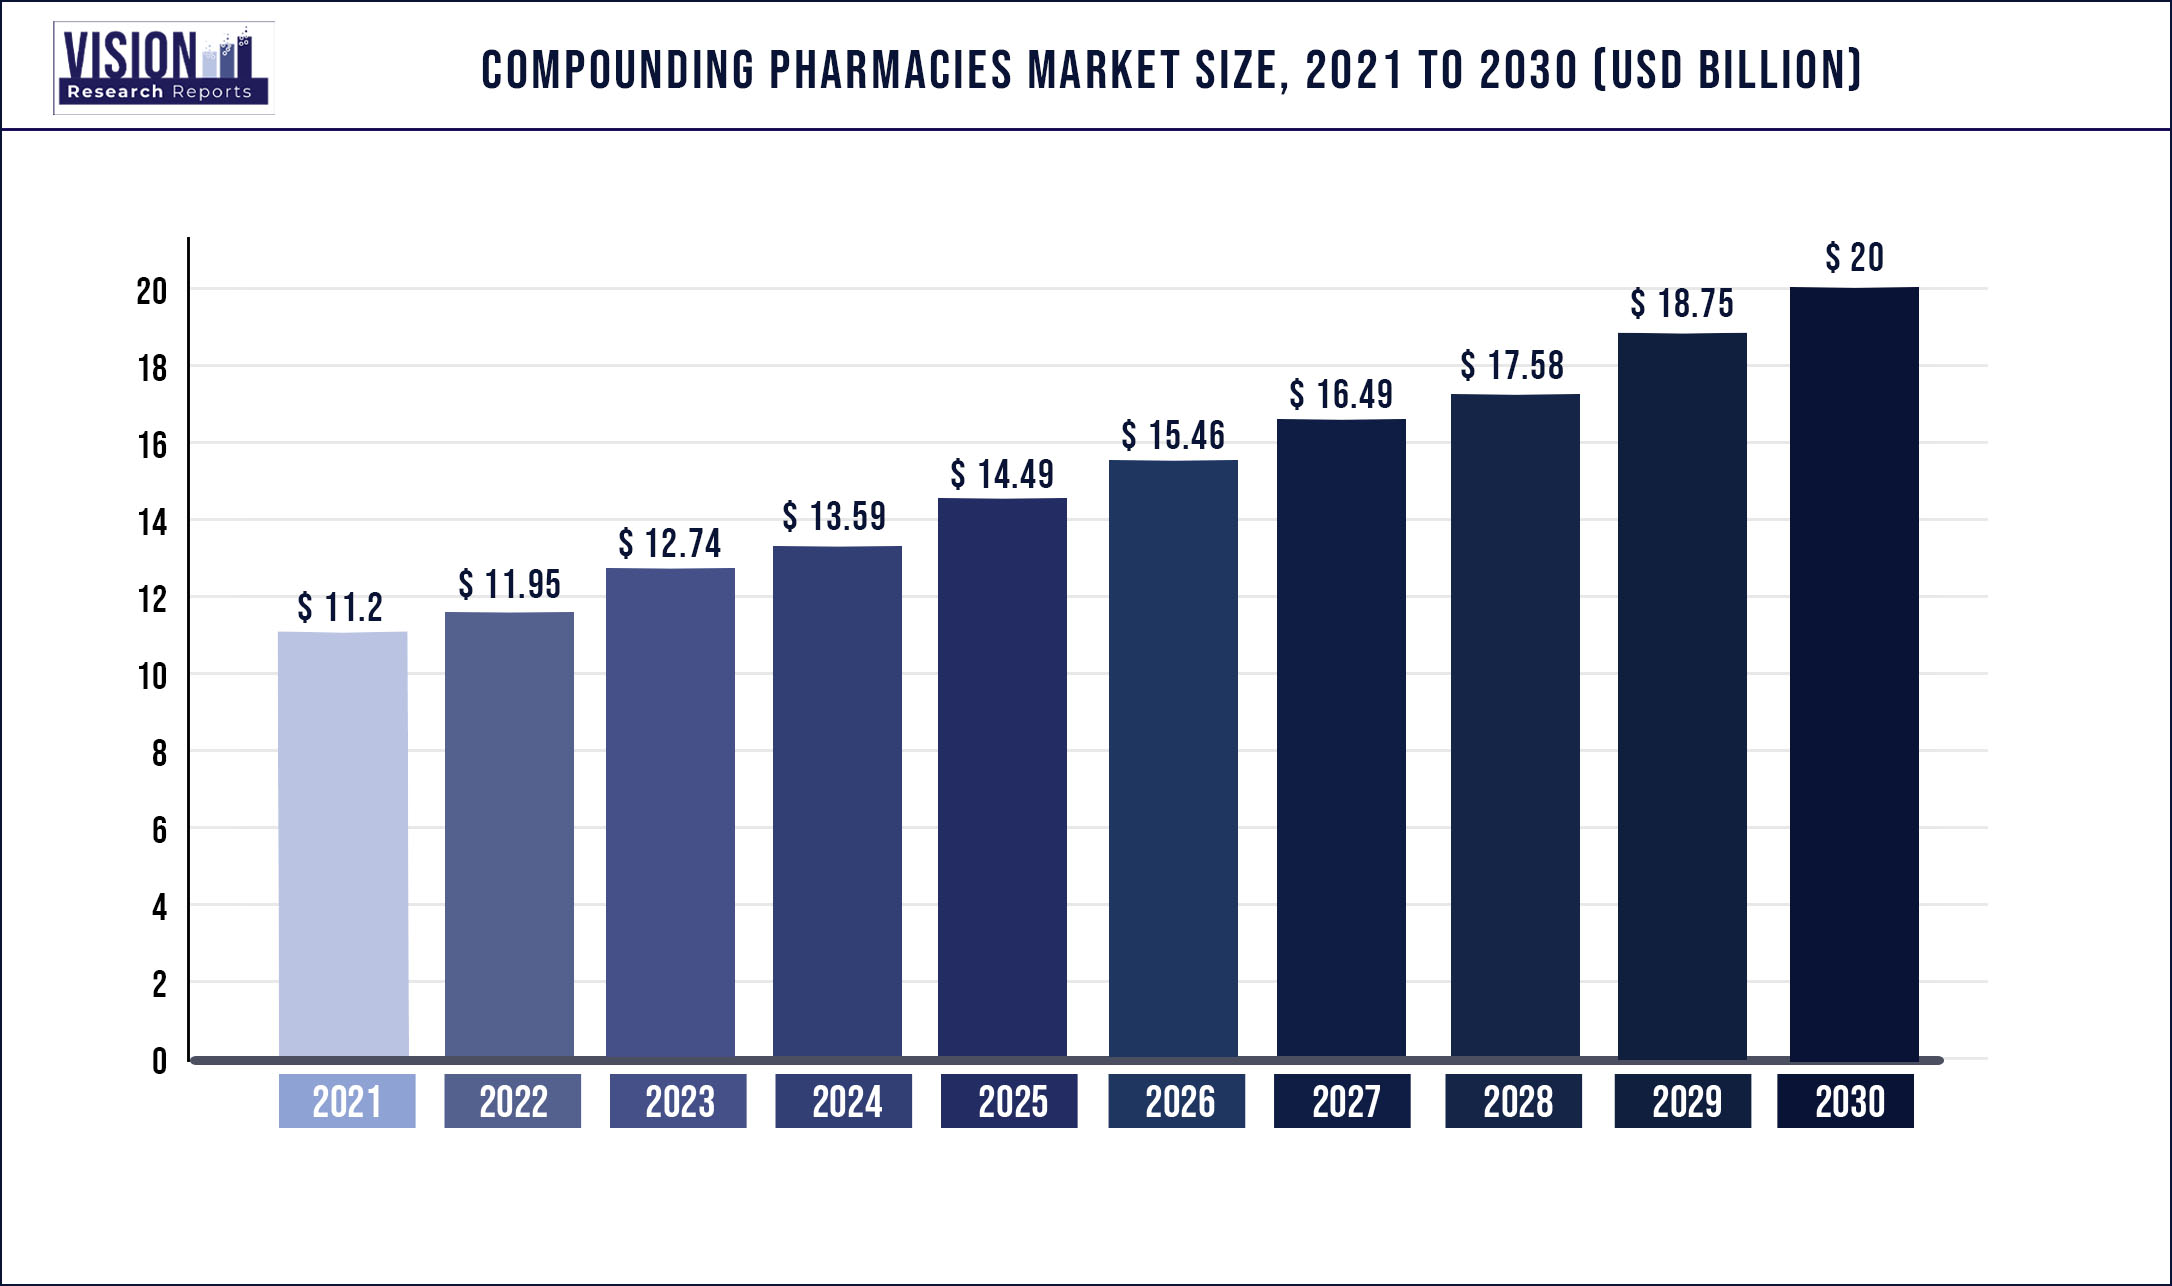 Compounding Pharmacies Market Size 2021 to 2030